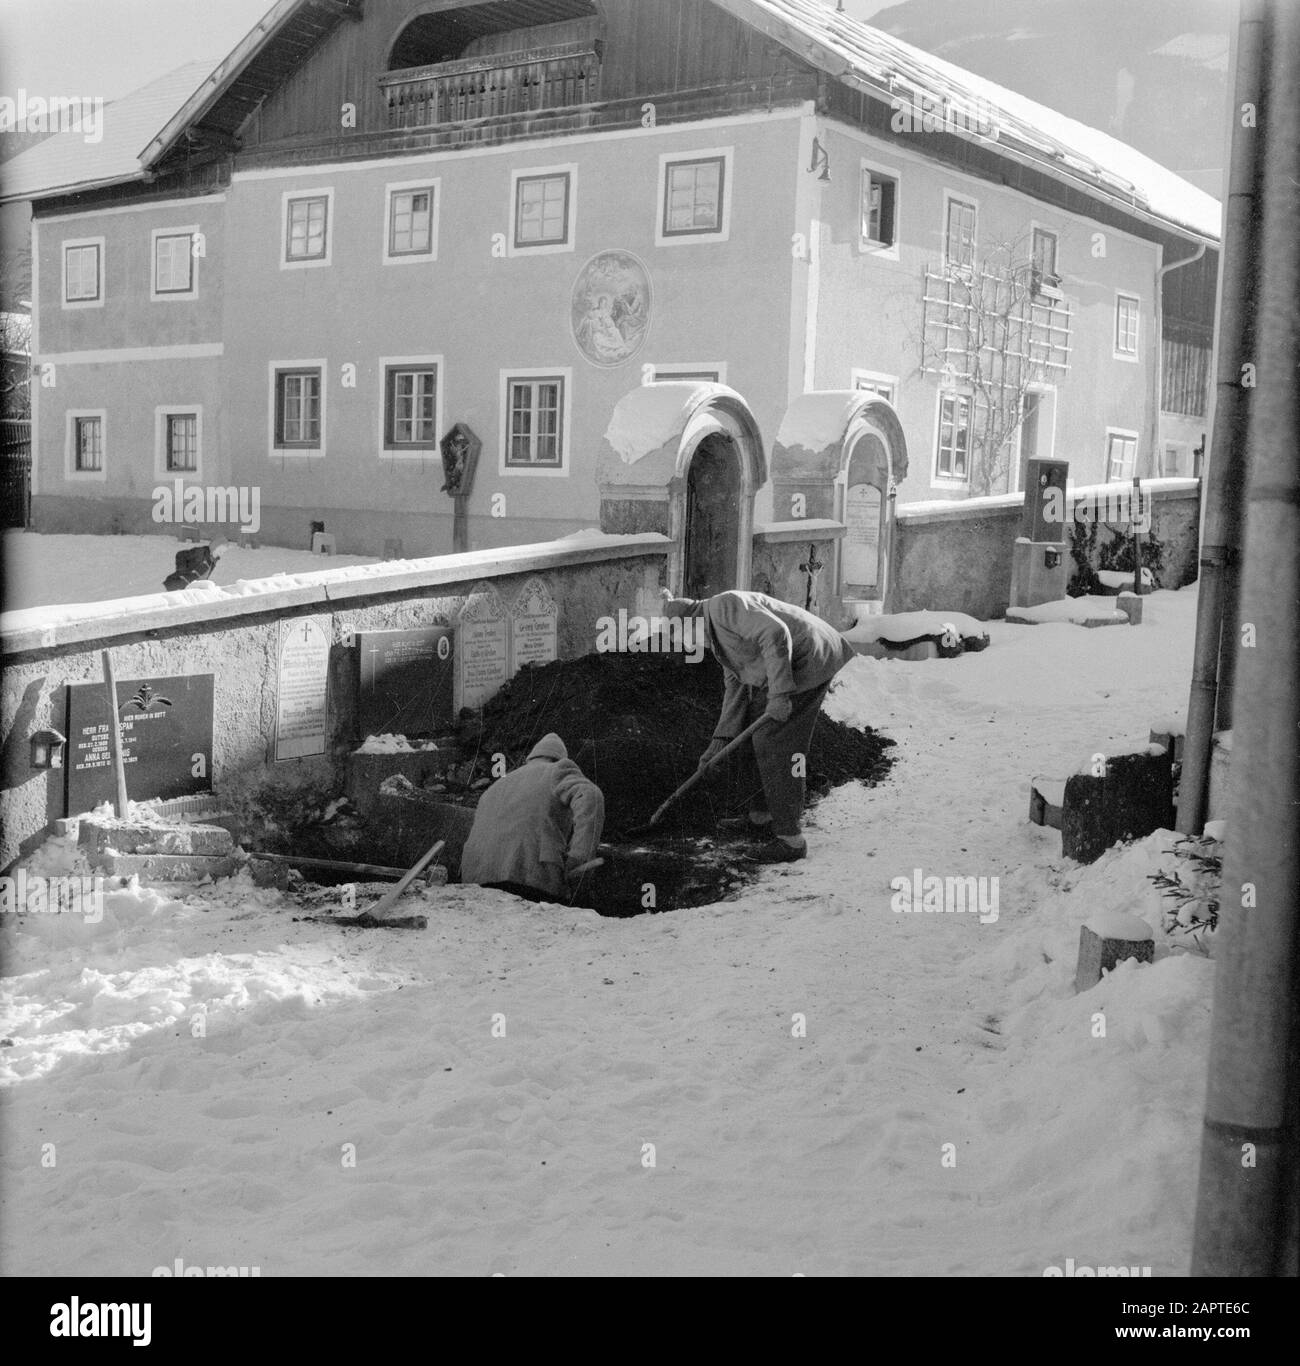 Winter in Tirol  Gravediggers at work in the snow Date: January 1960 Location: Austria, Sistrans, Tyrol Keywords: cemeteries, buildings, graves, snow, winter Stock Photo